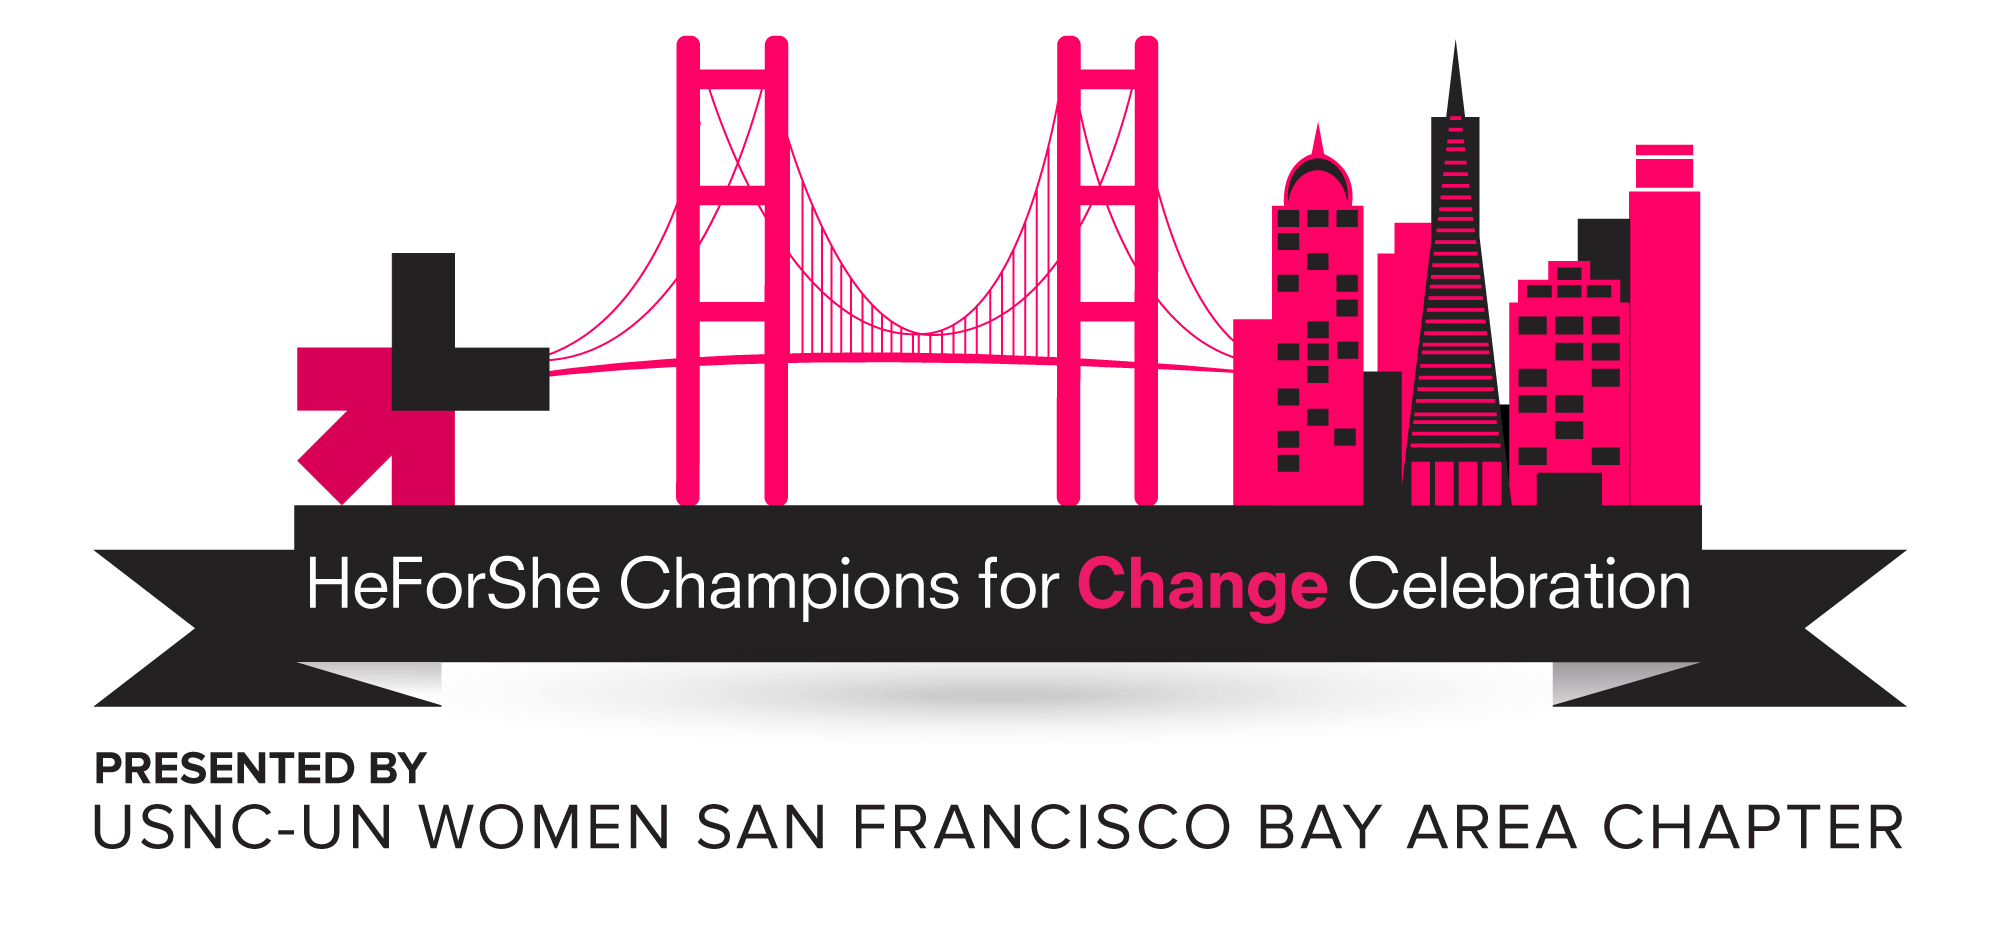 HeForShe Champions for Change - USNC UN Women San Francisco Bay Area Chapetr